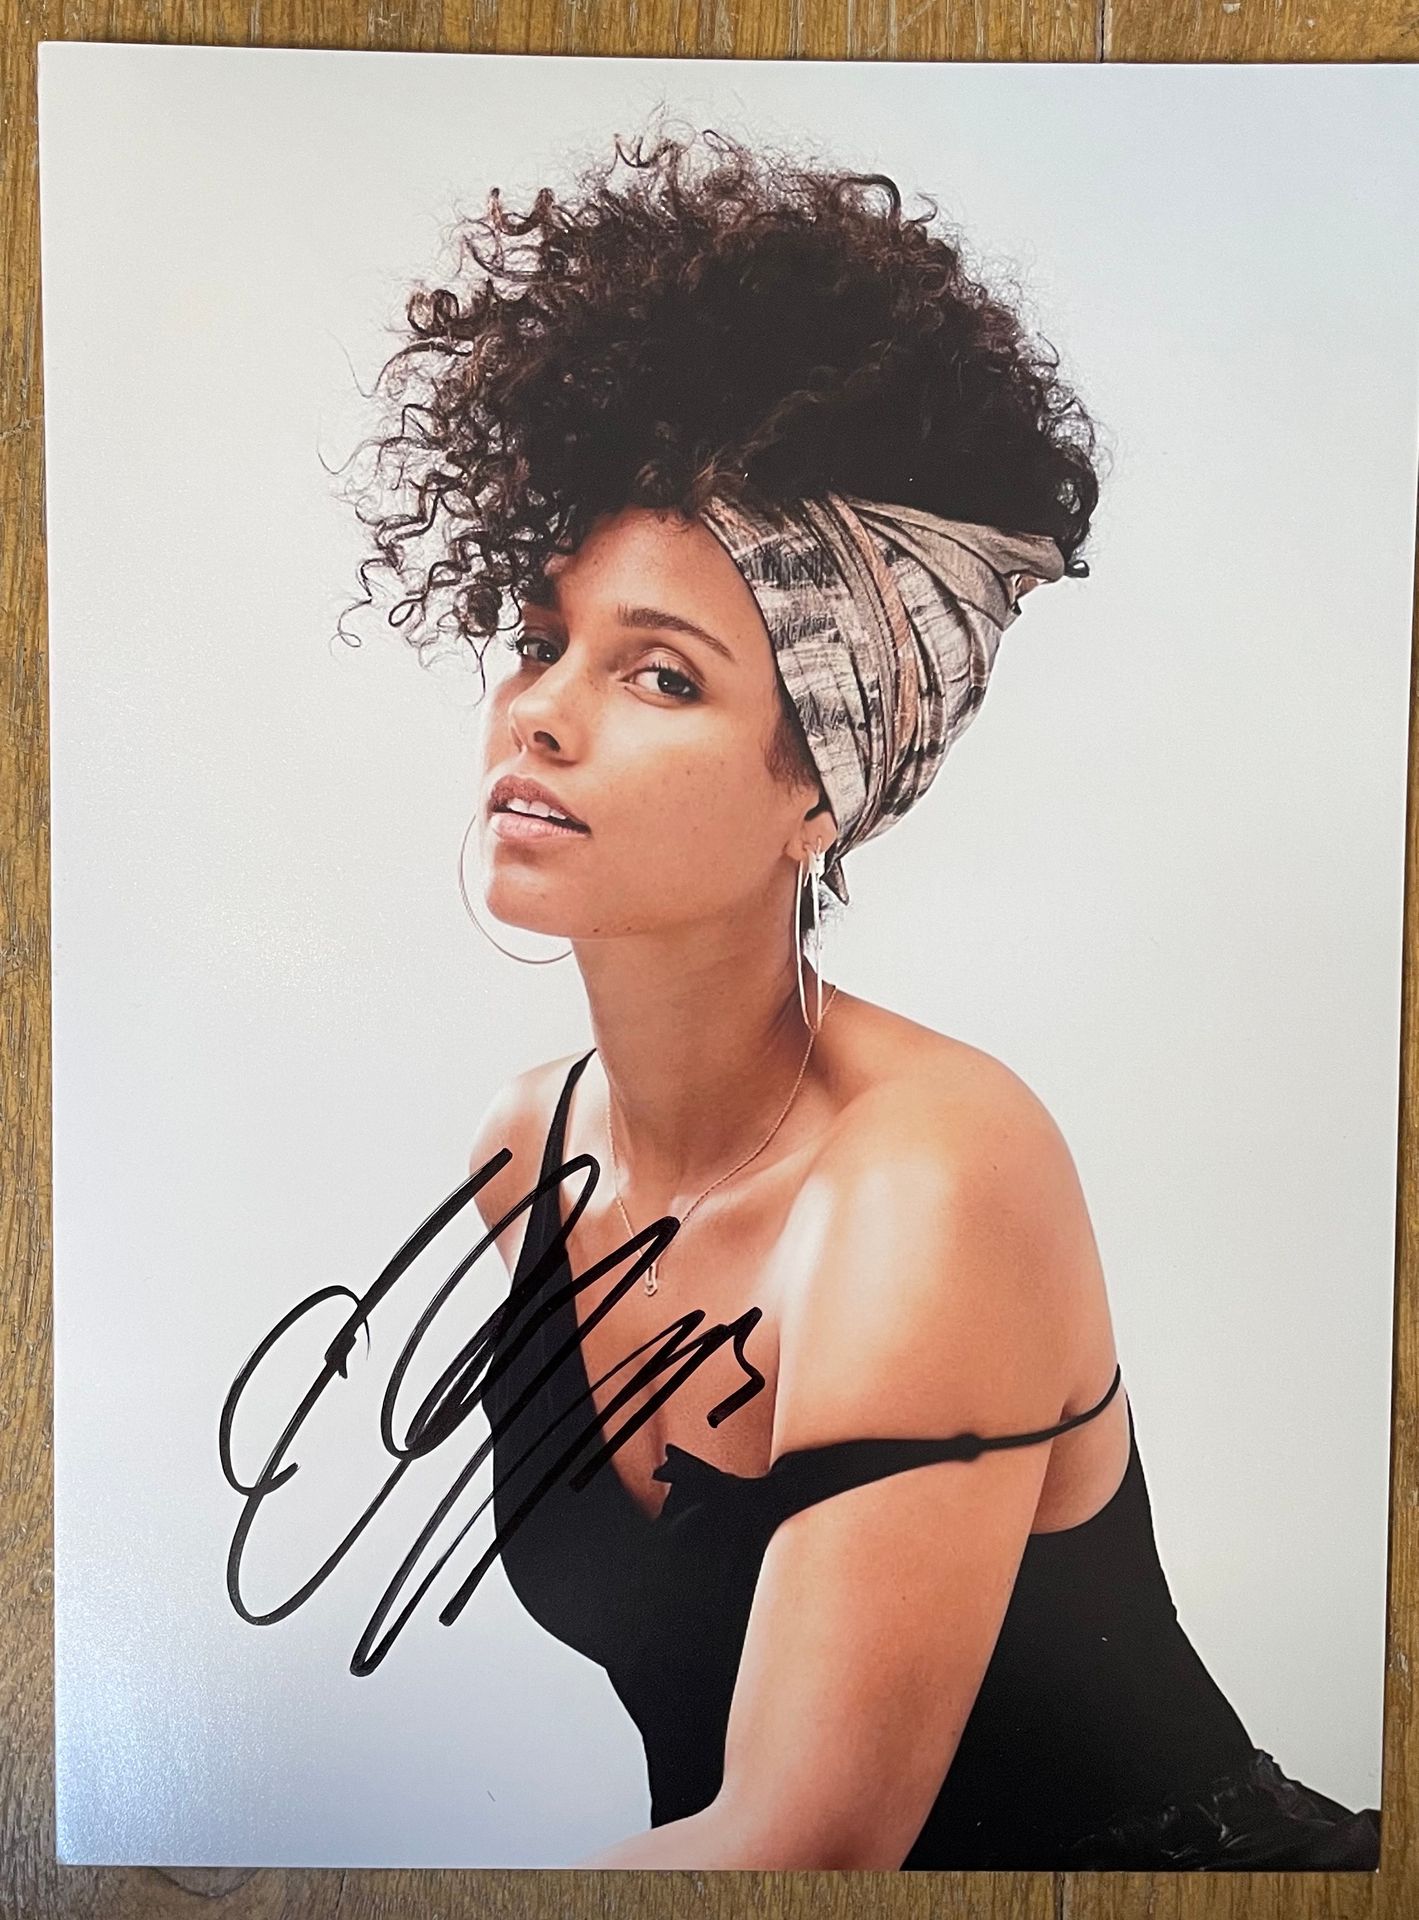 R&B/Funk… A photo - Alicia Keys
Signed by the artist
EX